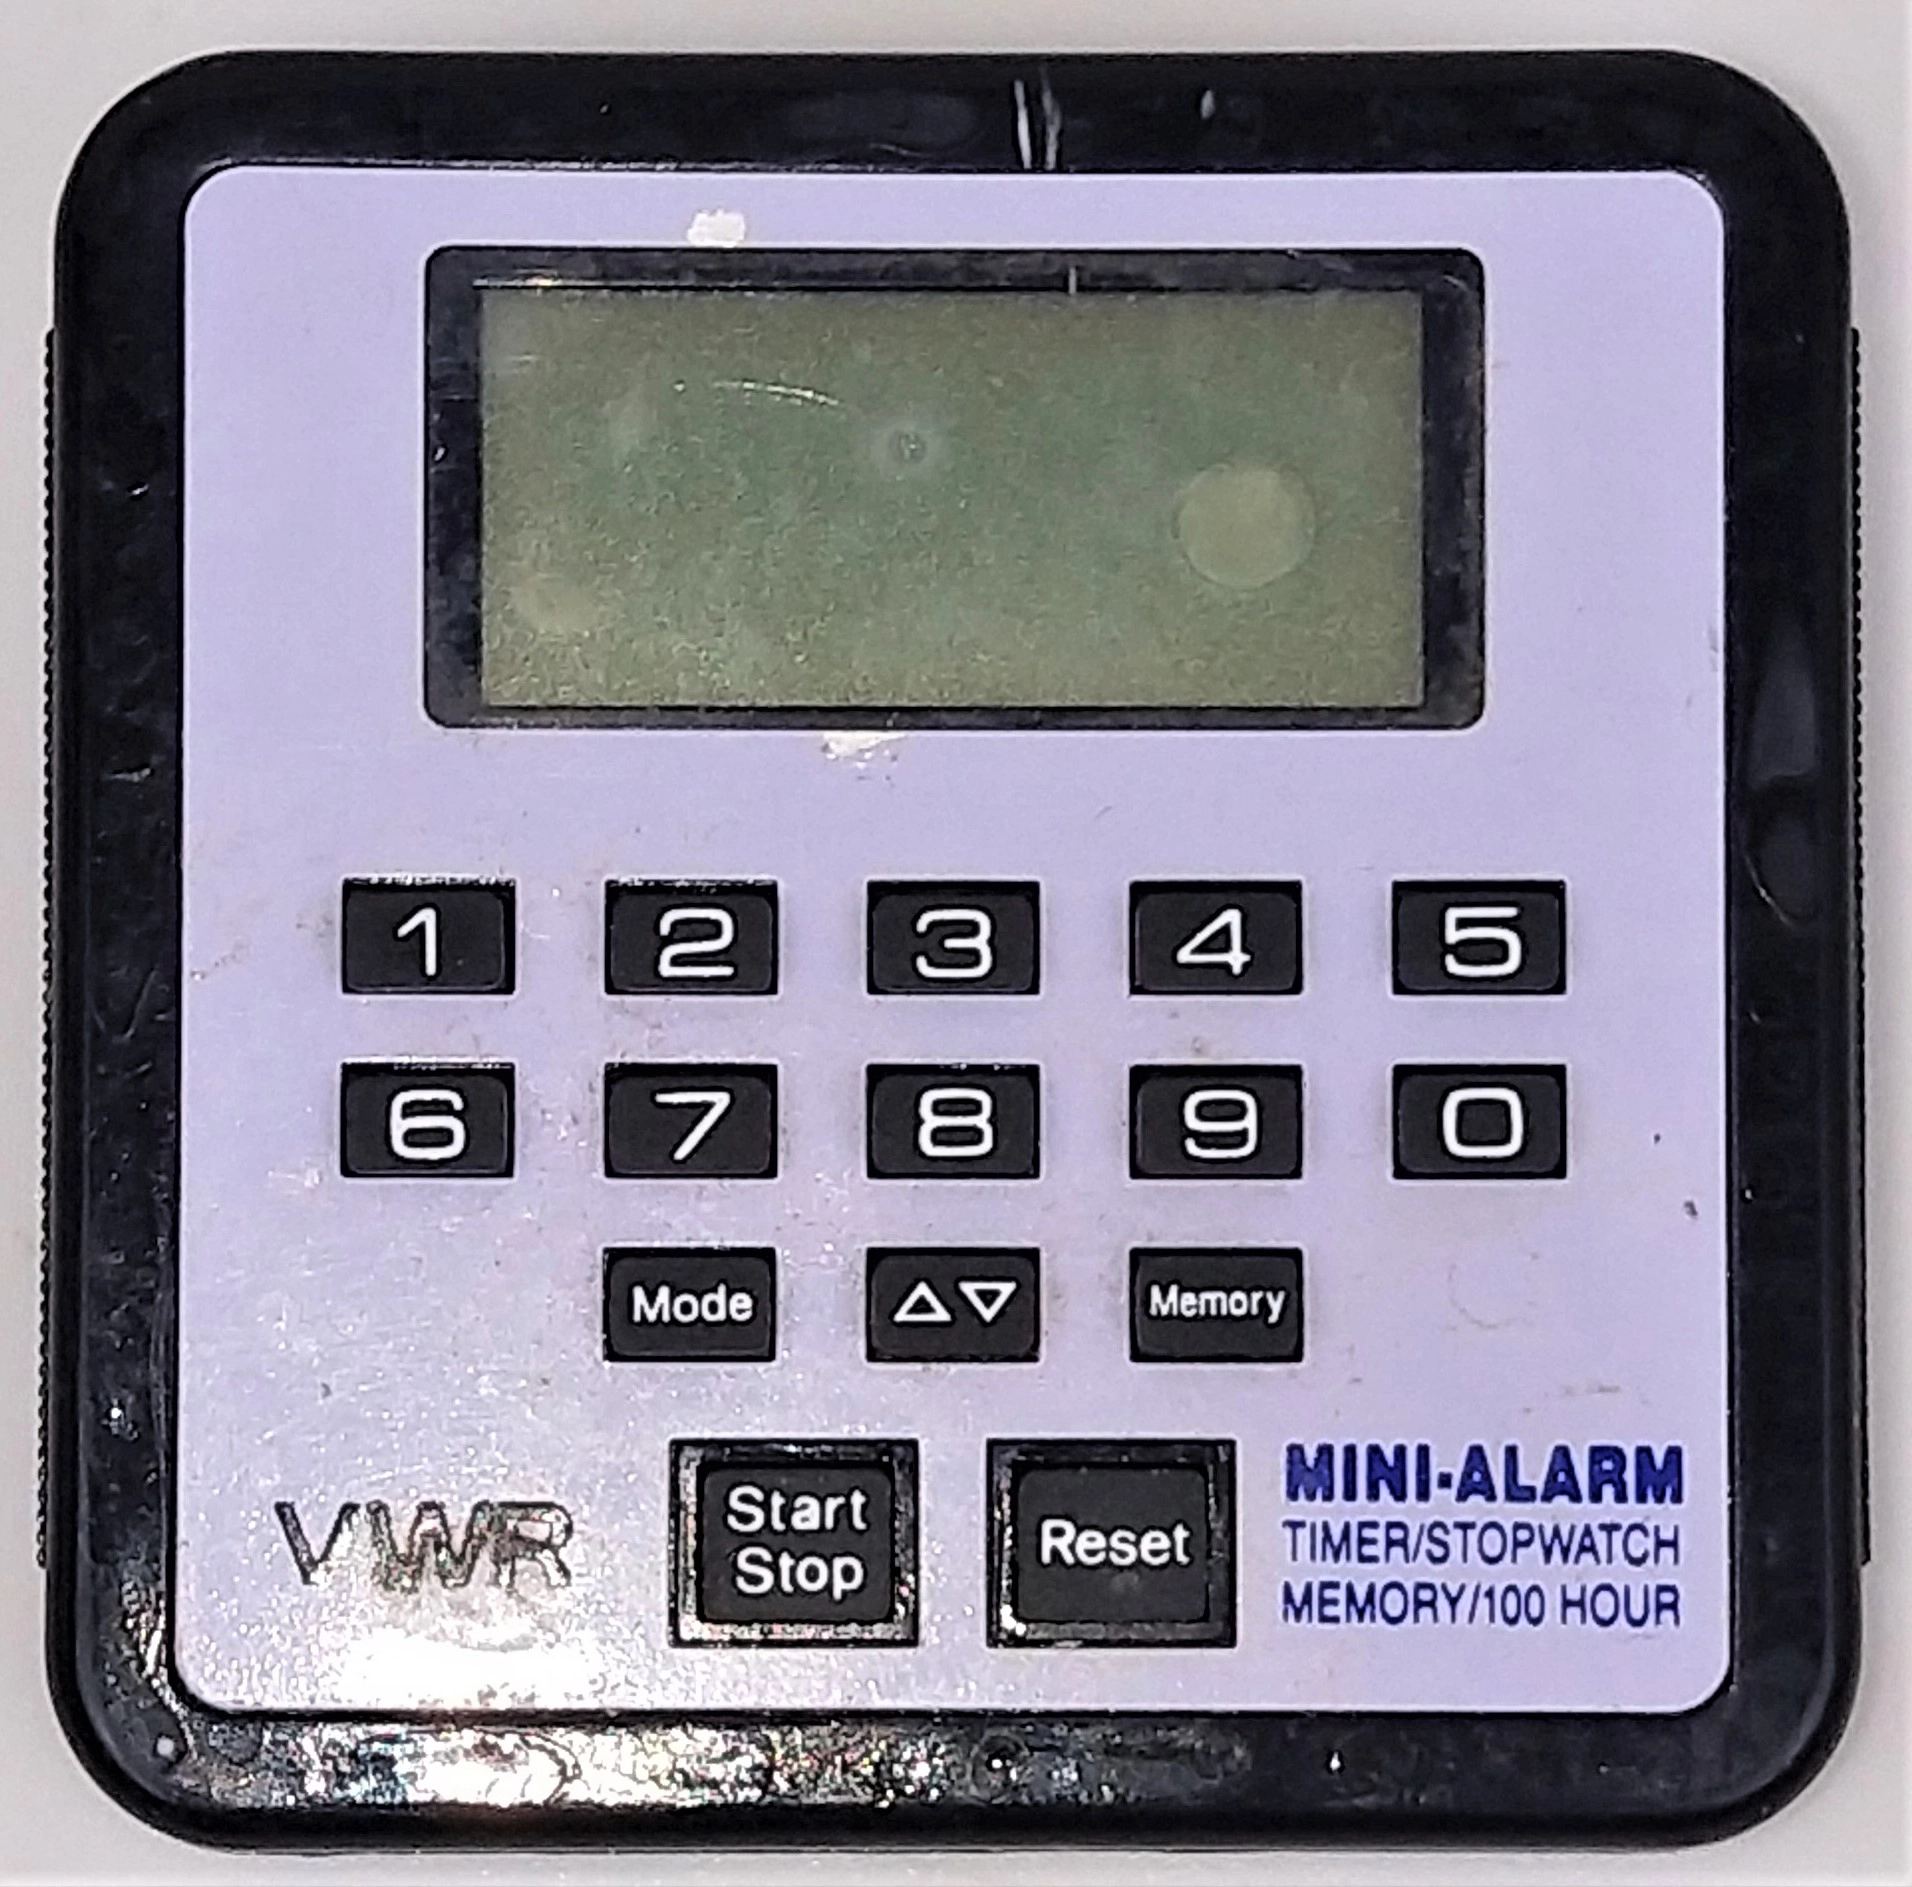 VWR Traceable 100-Hour Mini-Alarm Timer